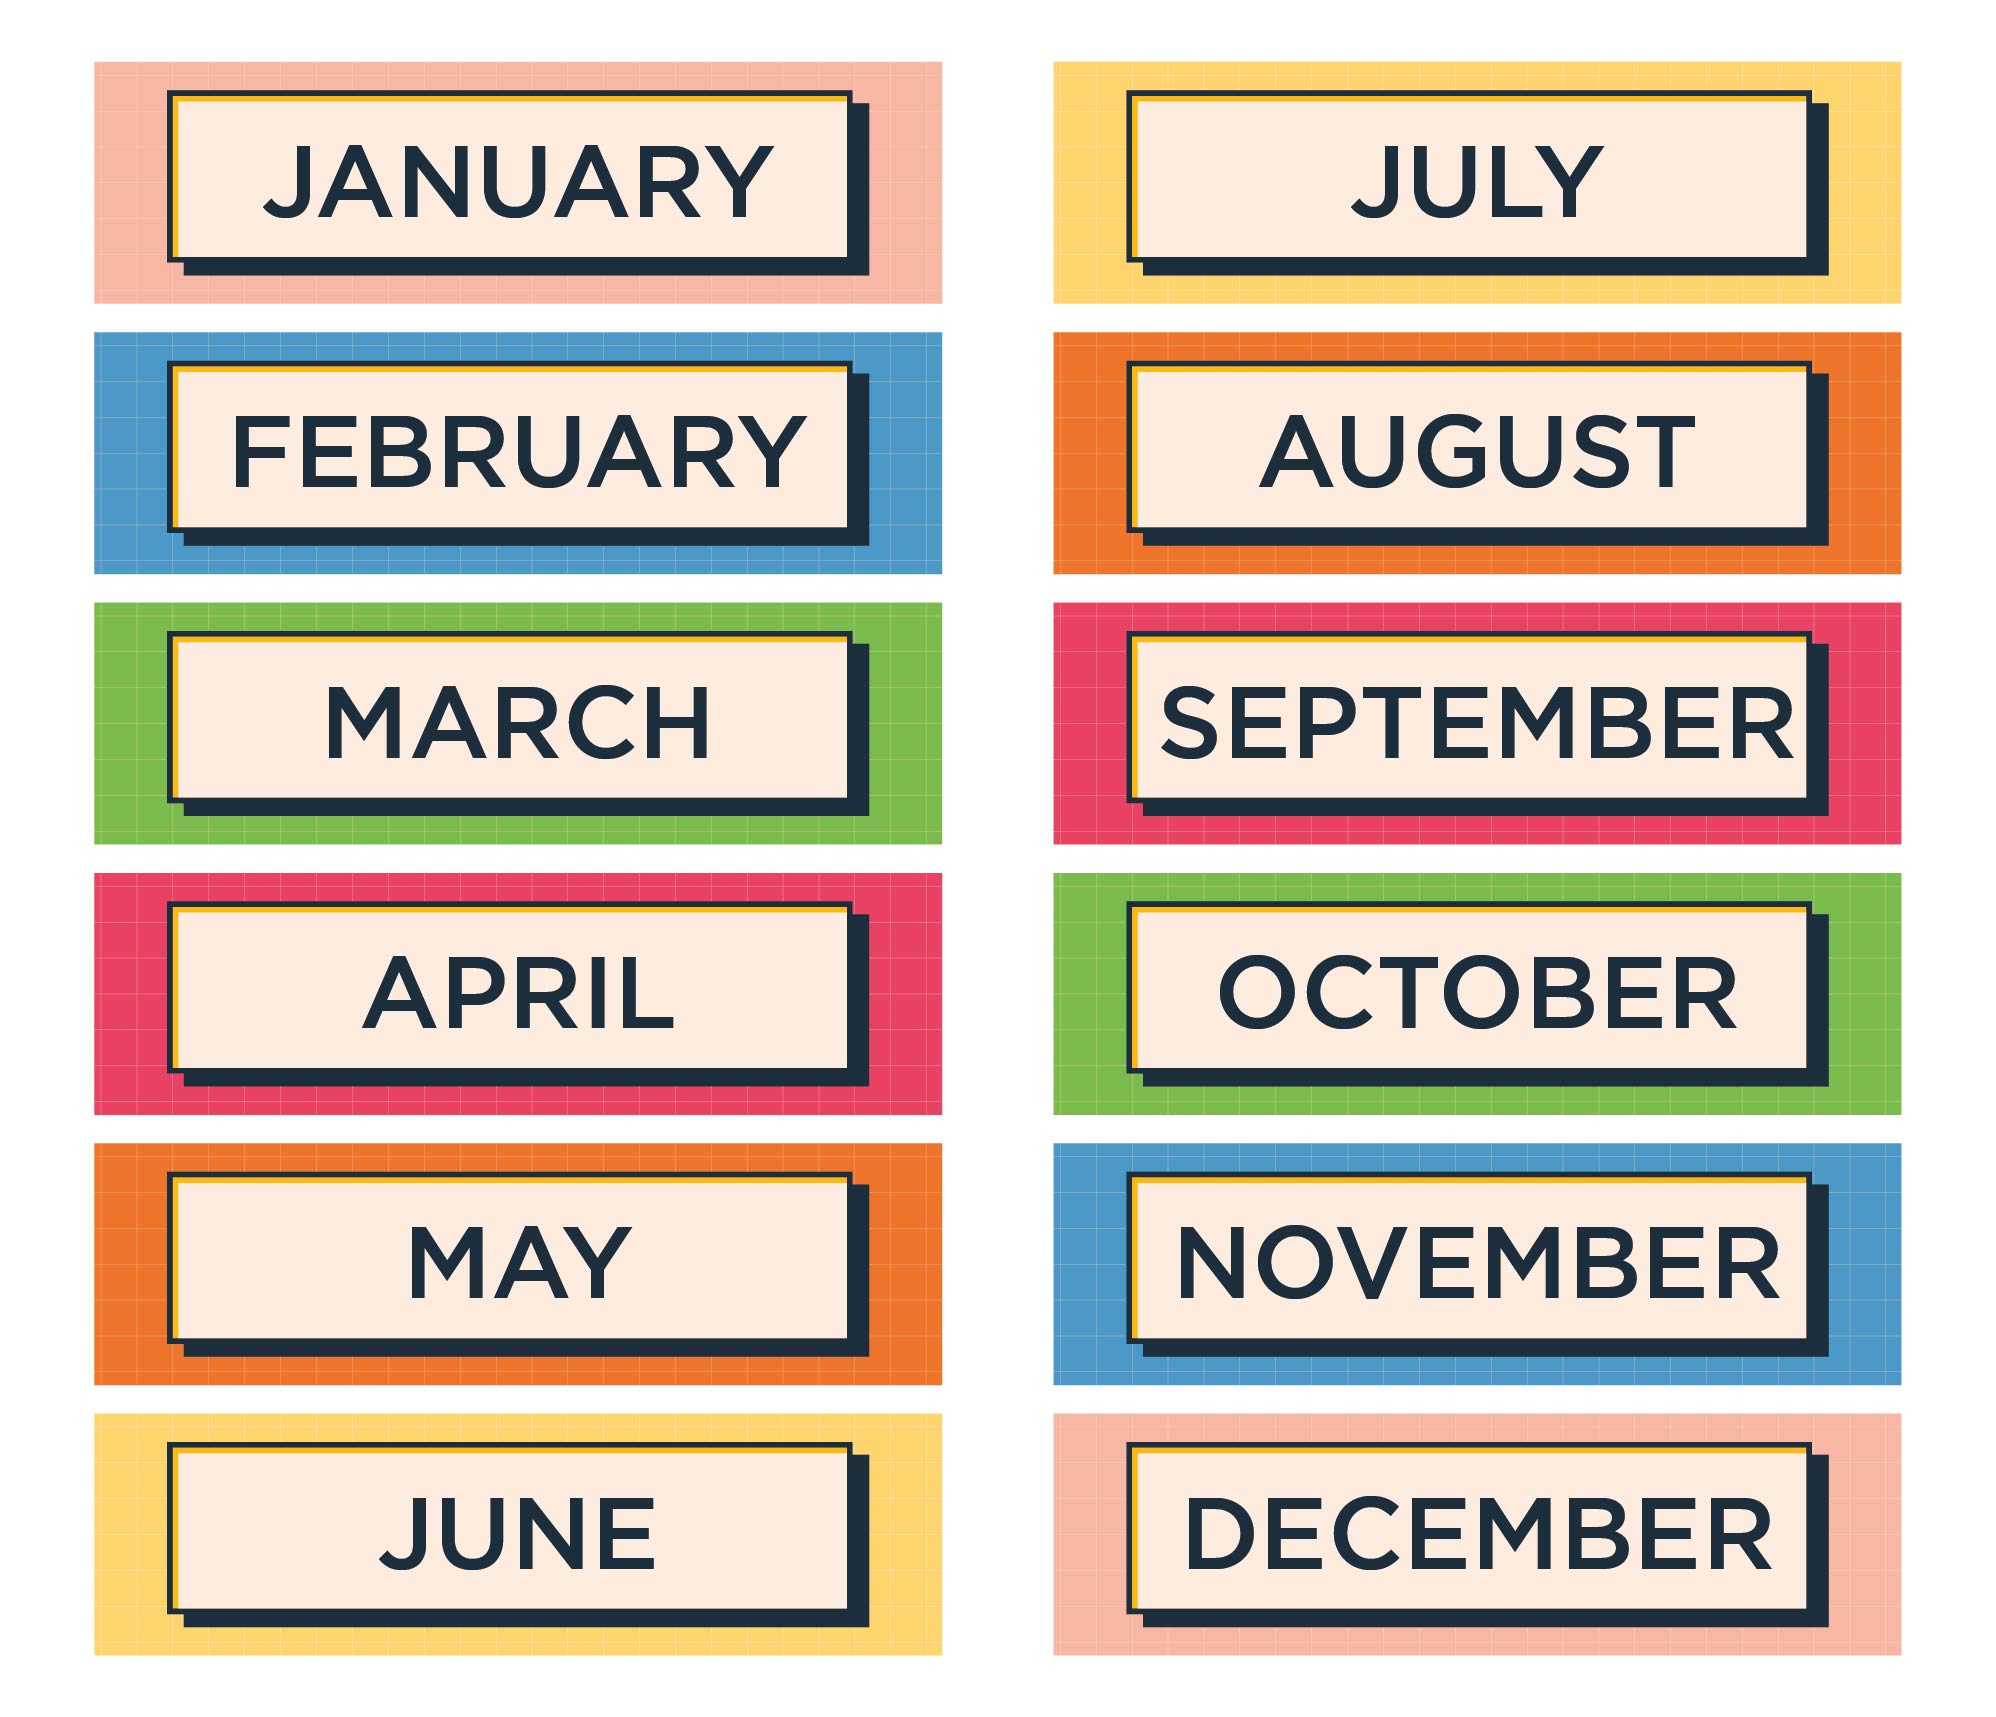 Printable Calendar Headers Months